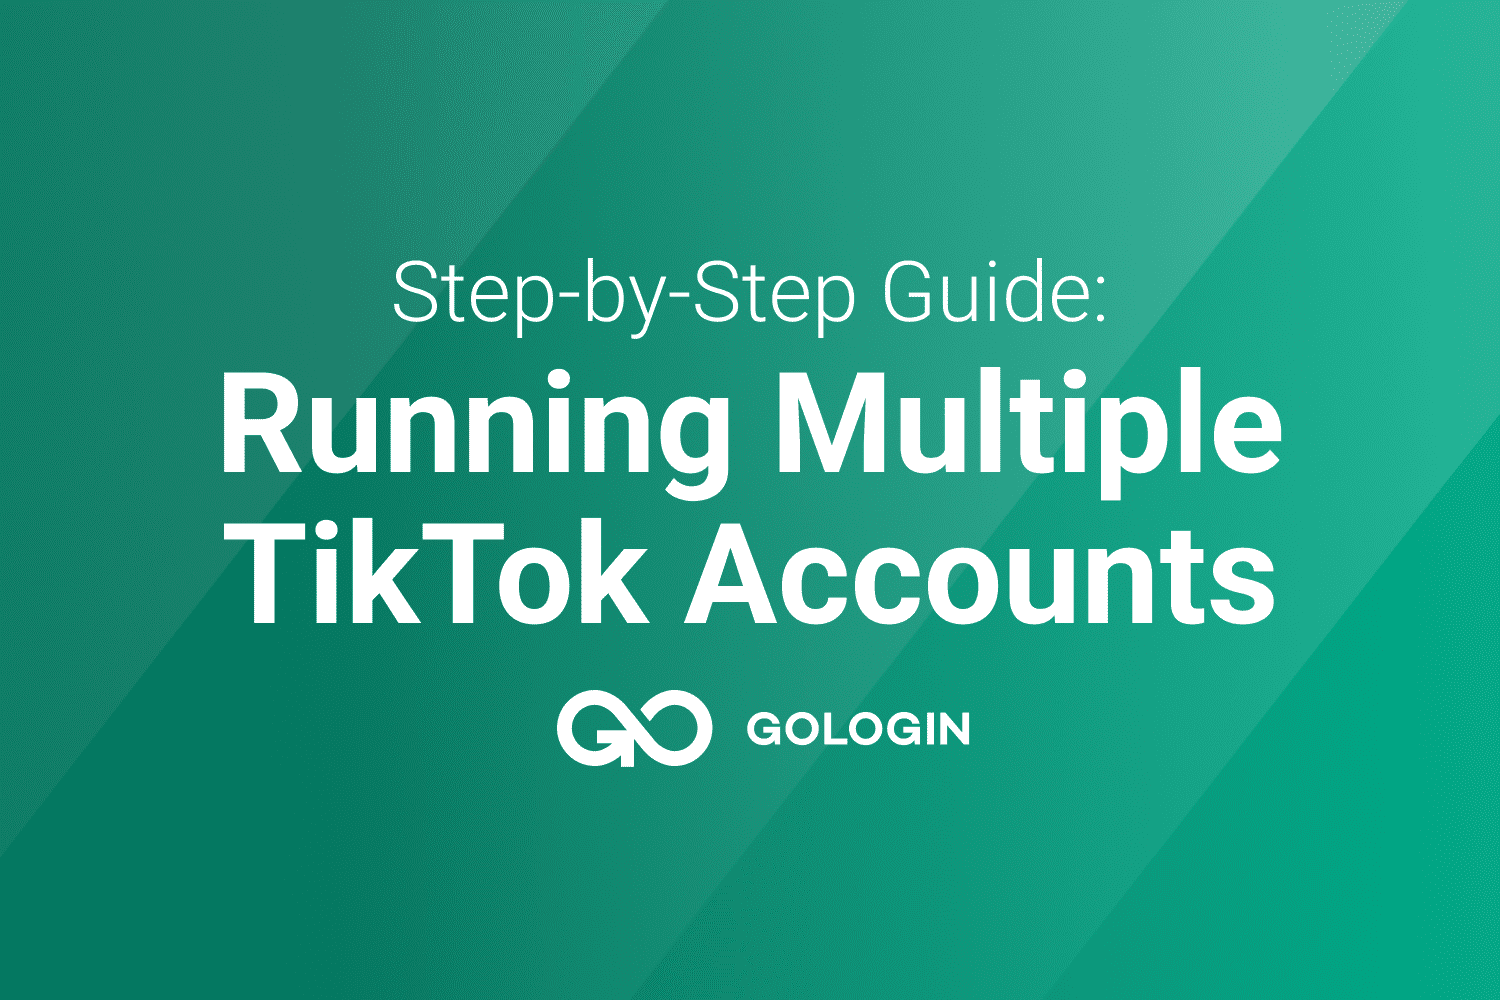 How to Get Verified on TikTok [A Step-By-Step Guide]